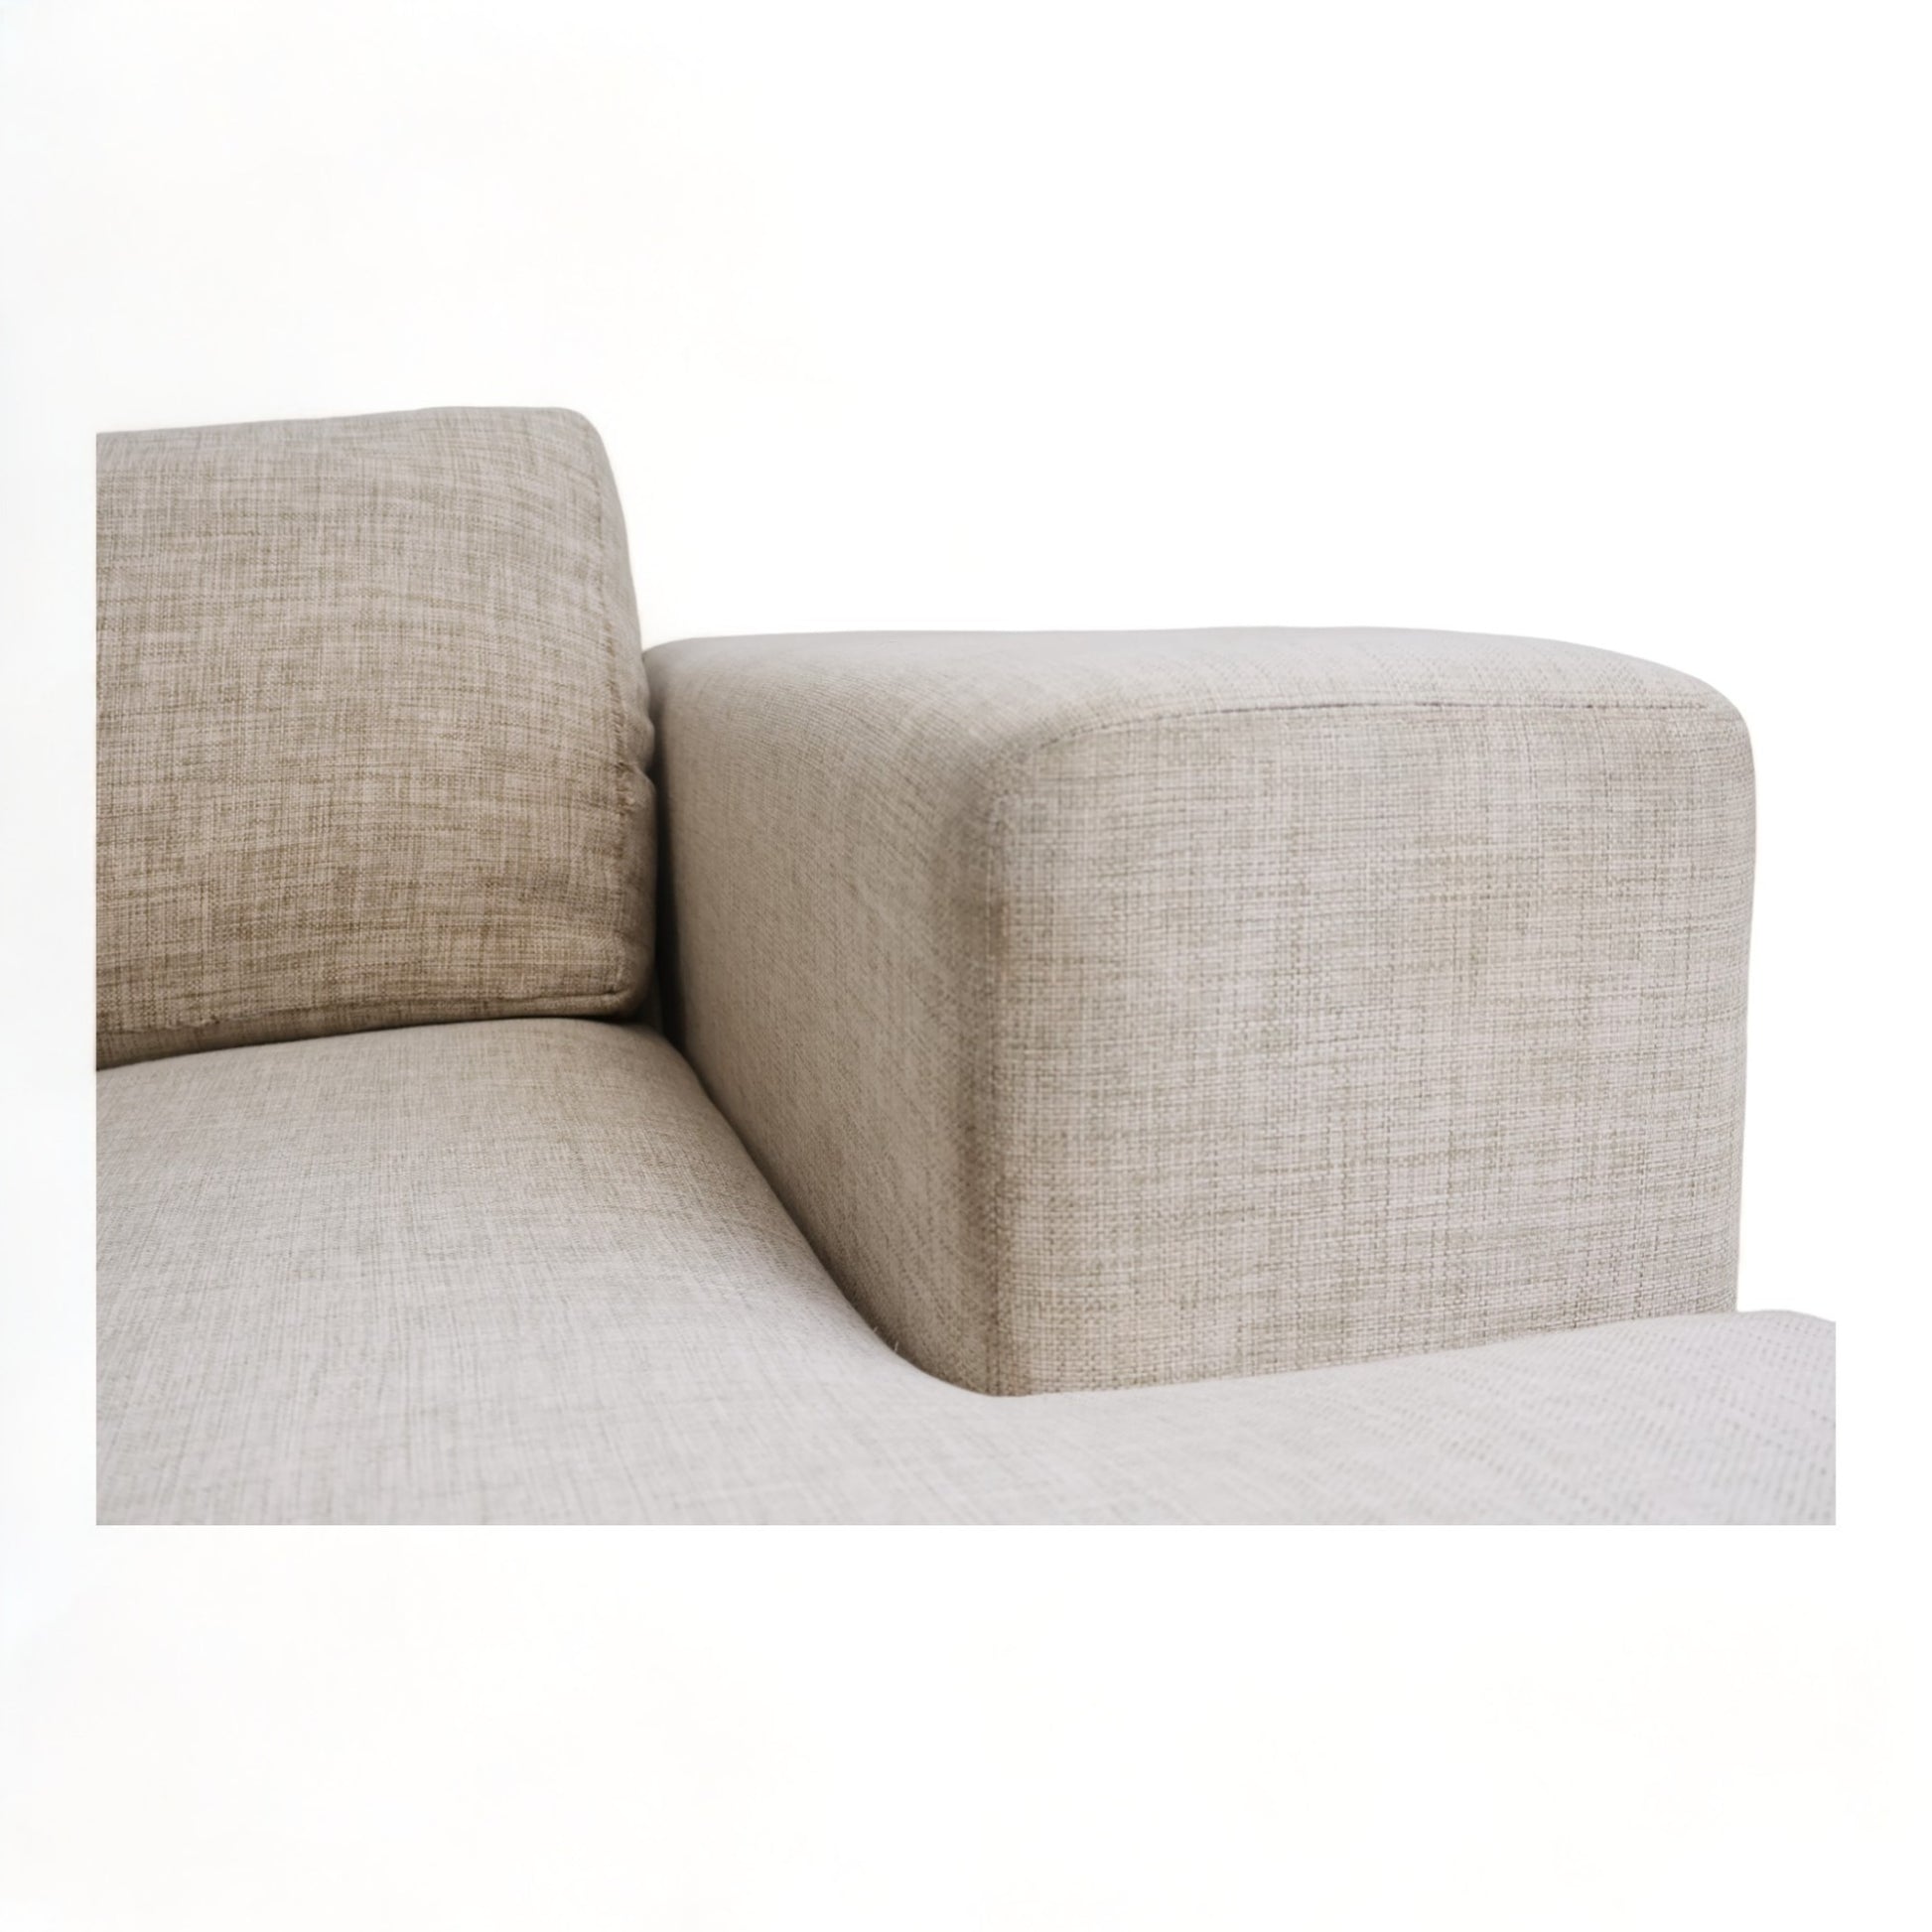 Nyrenset | Bolia Sepia 4. pers sofa med sjeselong